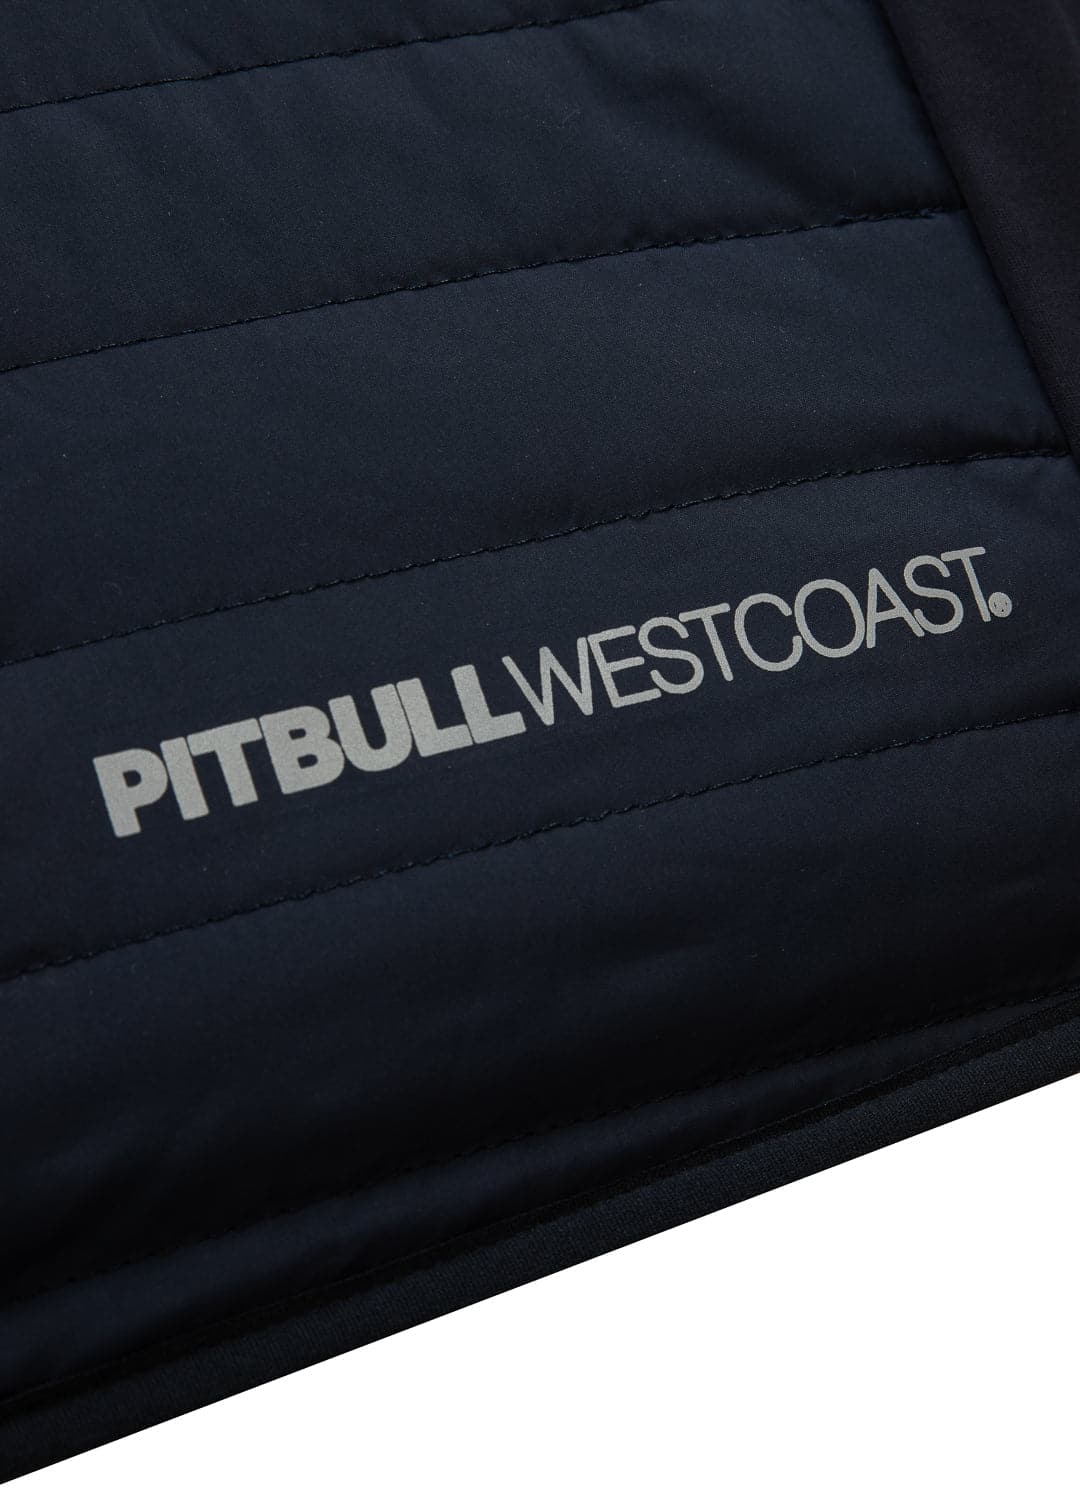 DILLARD Kids black jacket - Pitbull West Coast International Store 